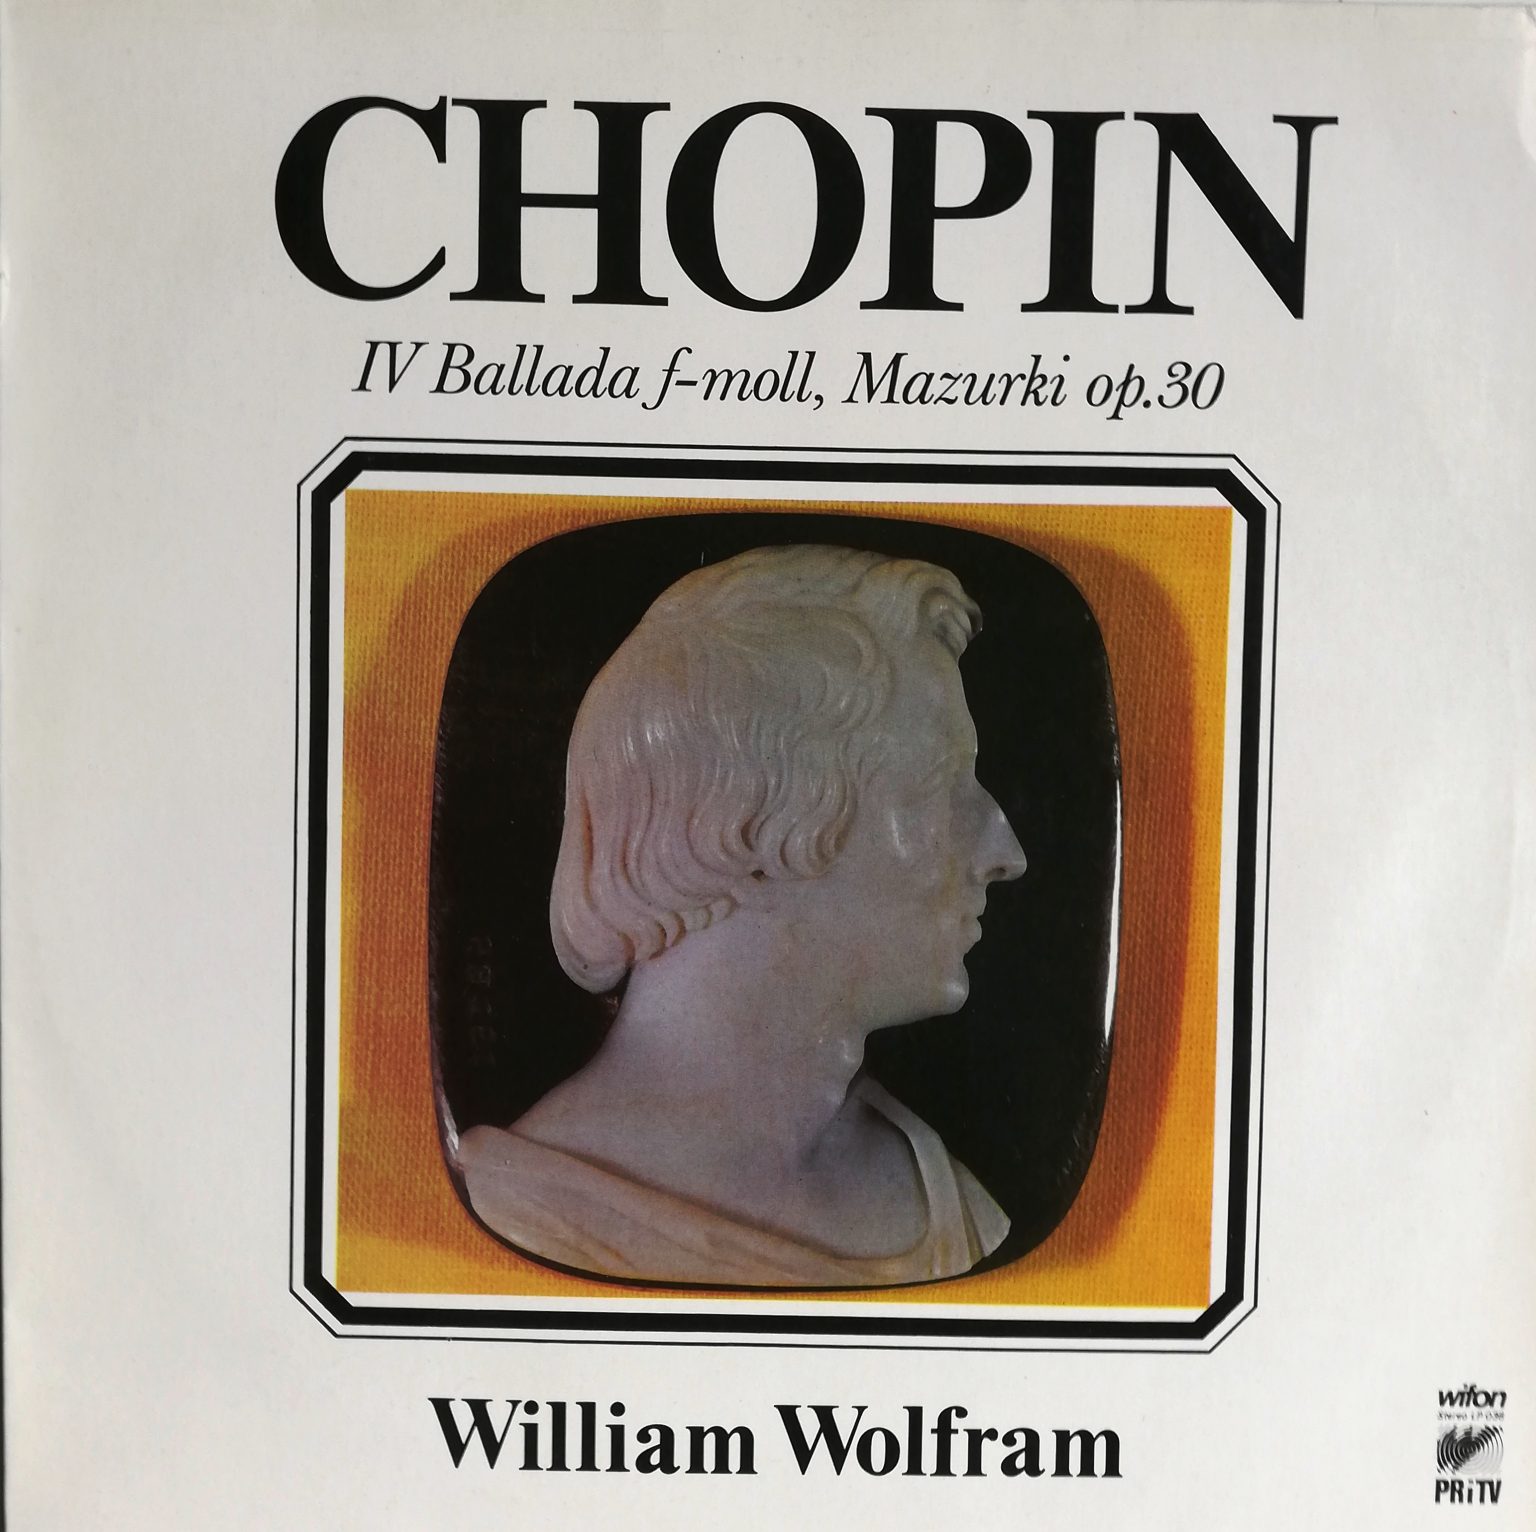 William Wolfram – Chopin IV Ballada f-moll, Mazurki op.30